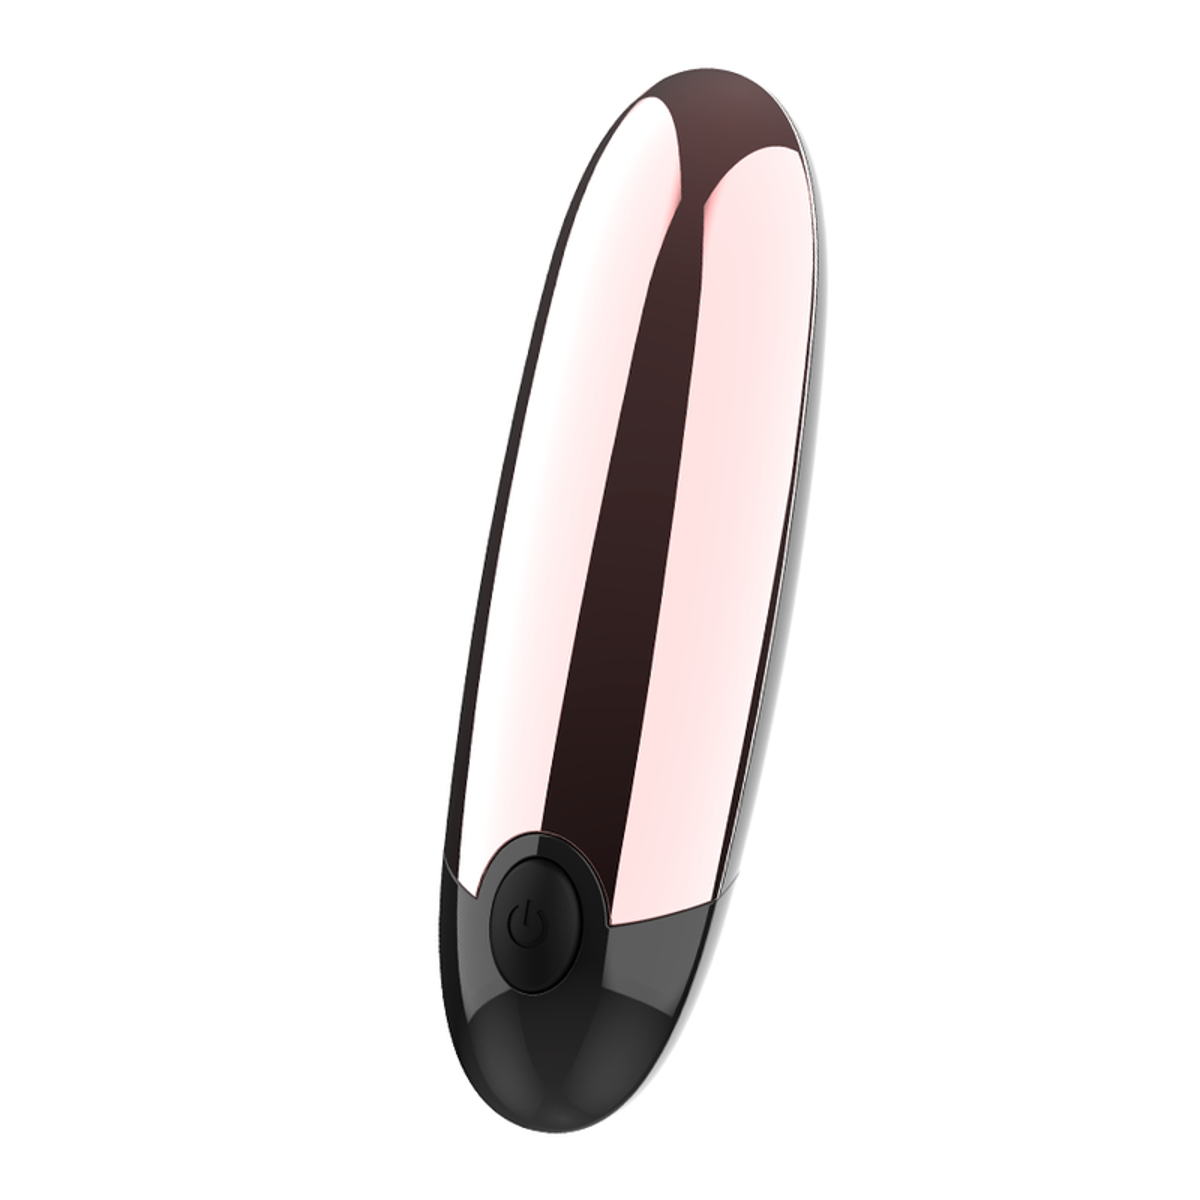 Minivibrator "Vibrating Lipstick" im Lippenstift-Design - OH MY! FANTASY